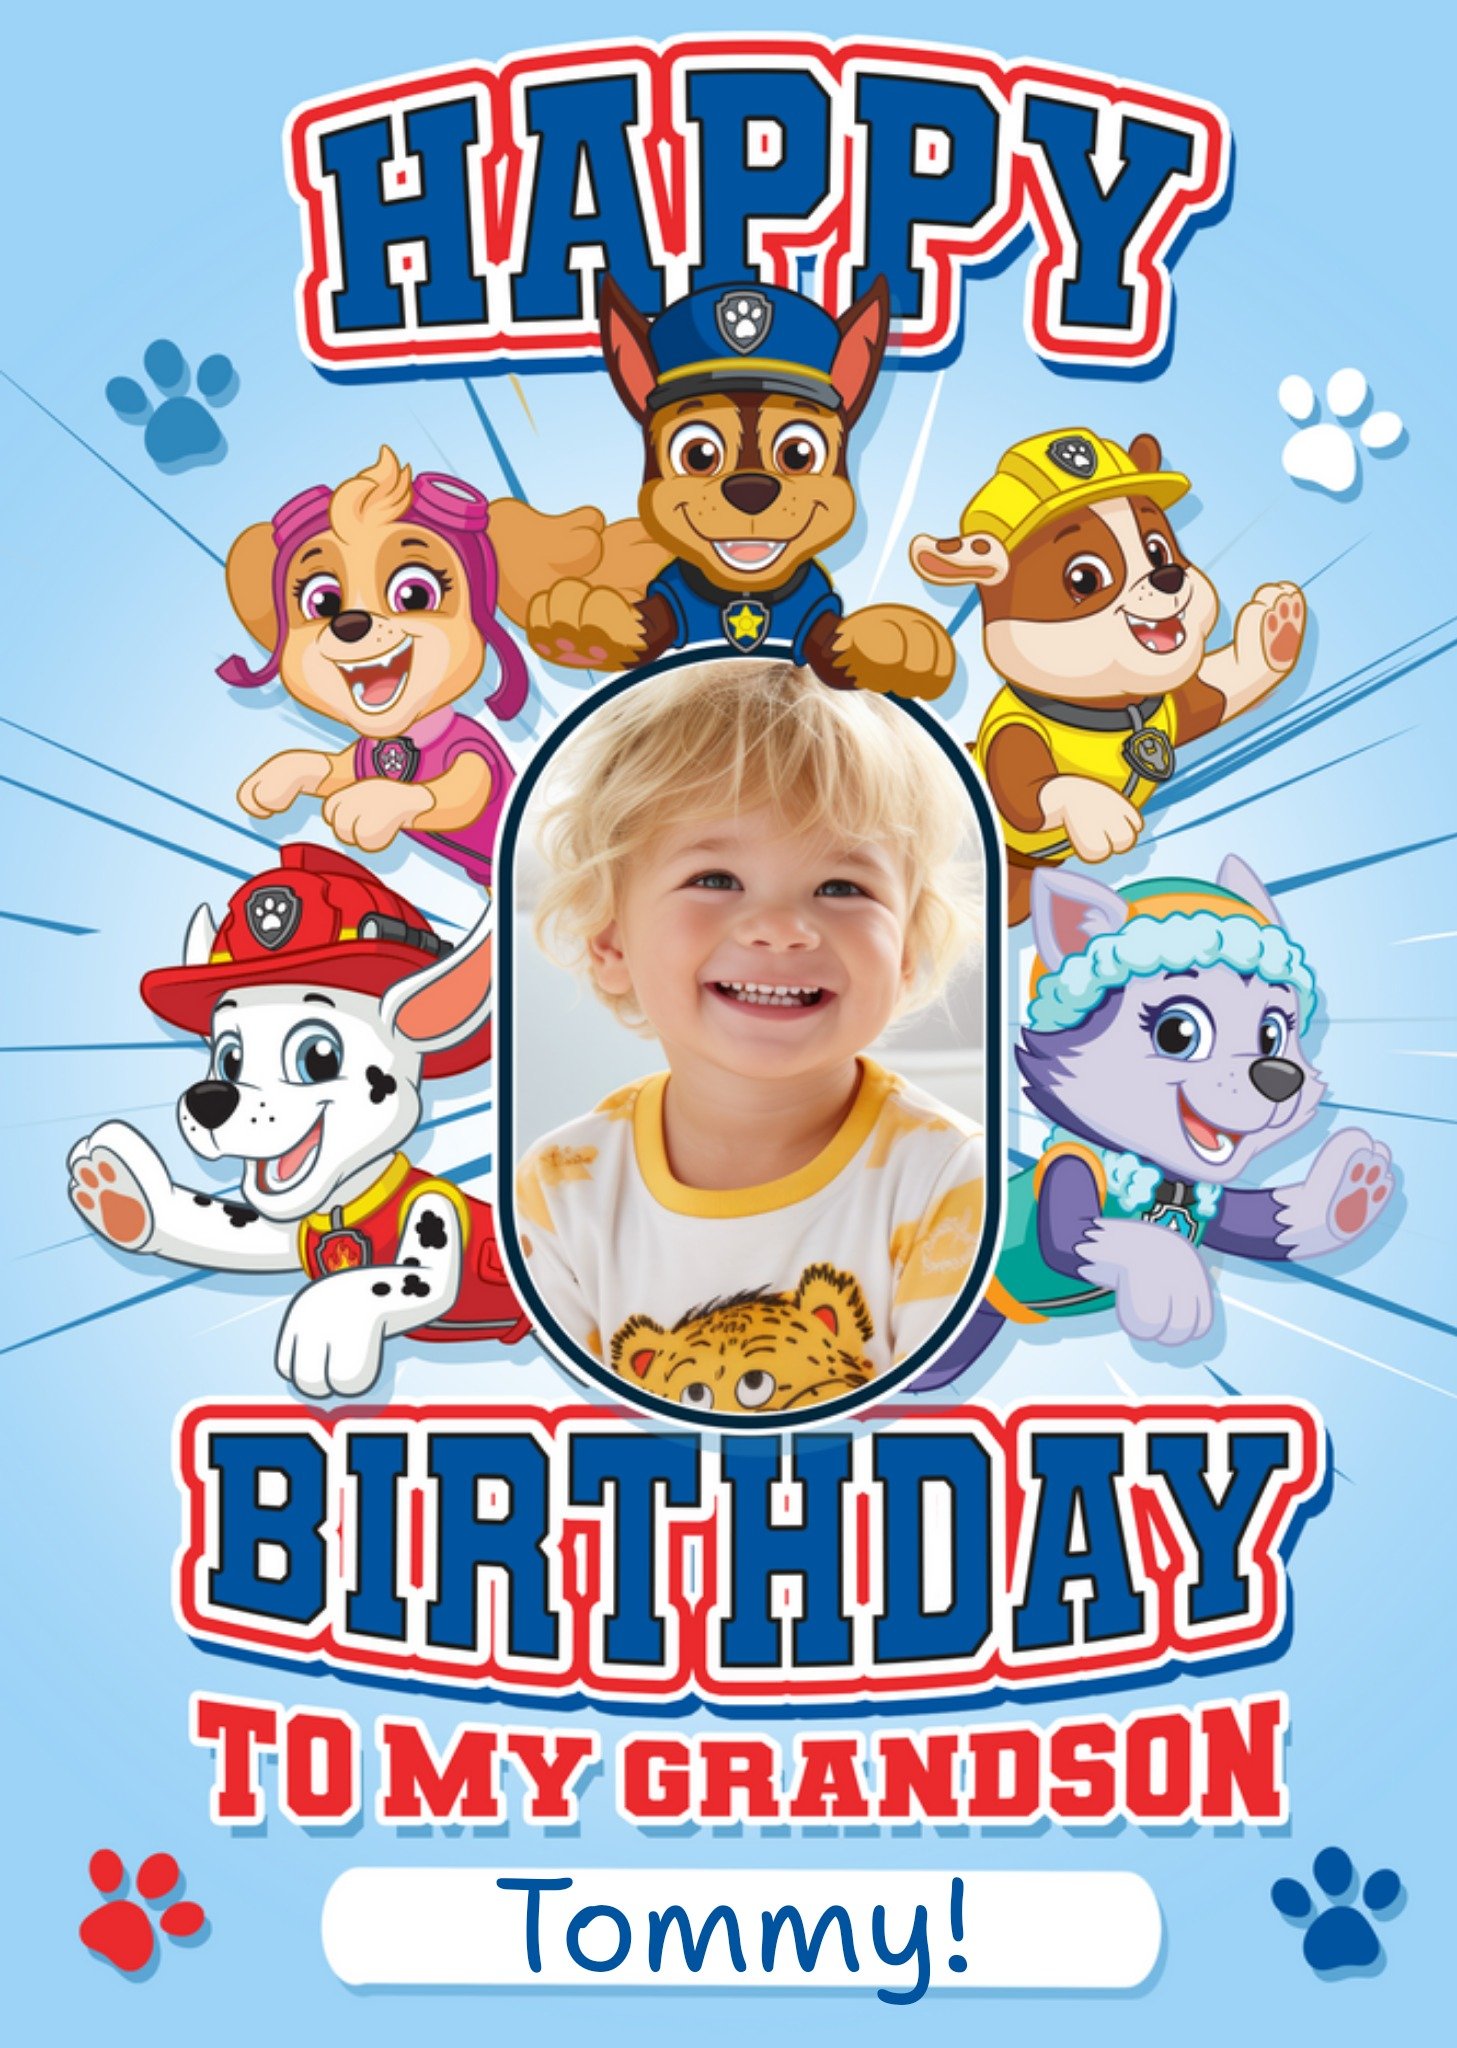 Nickelodeon Paw Patrol Grandson's Photo Upload Birthday Card Ecard